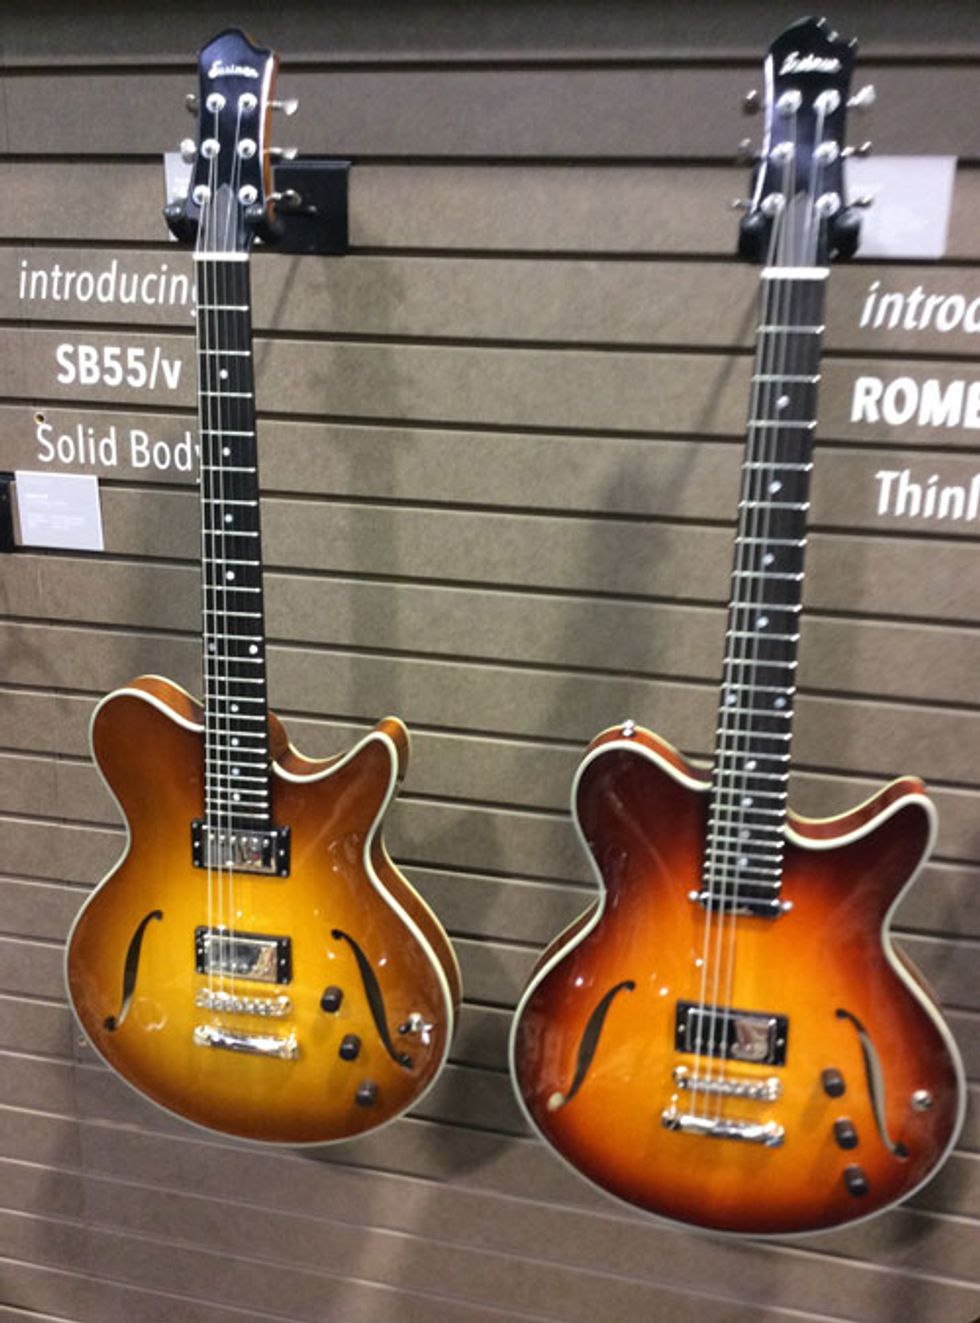 Eastman Guitars